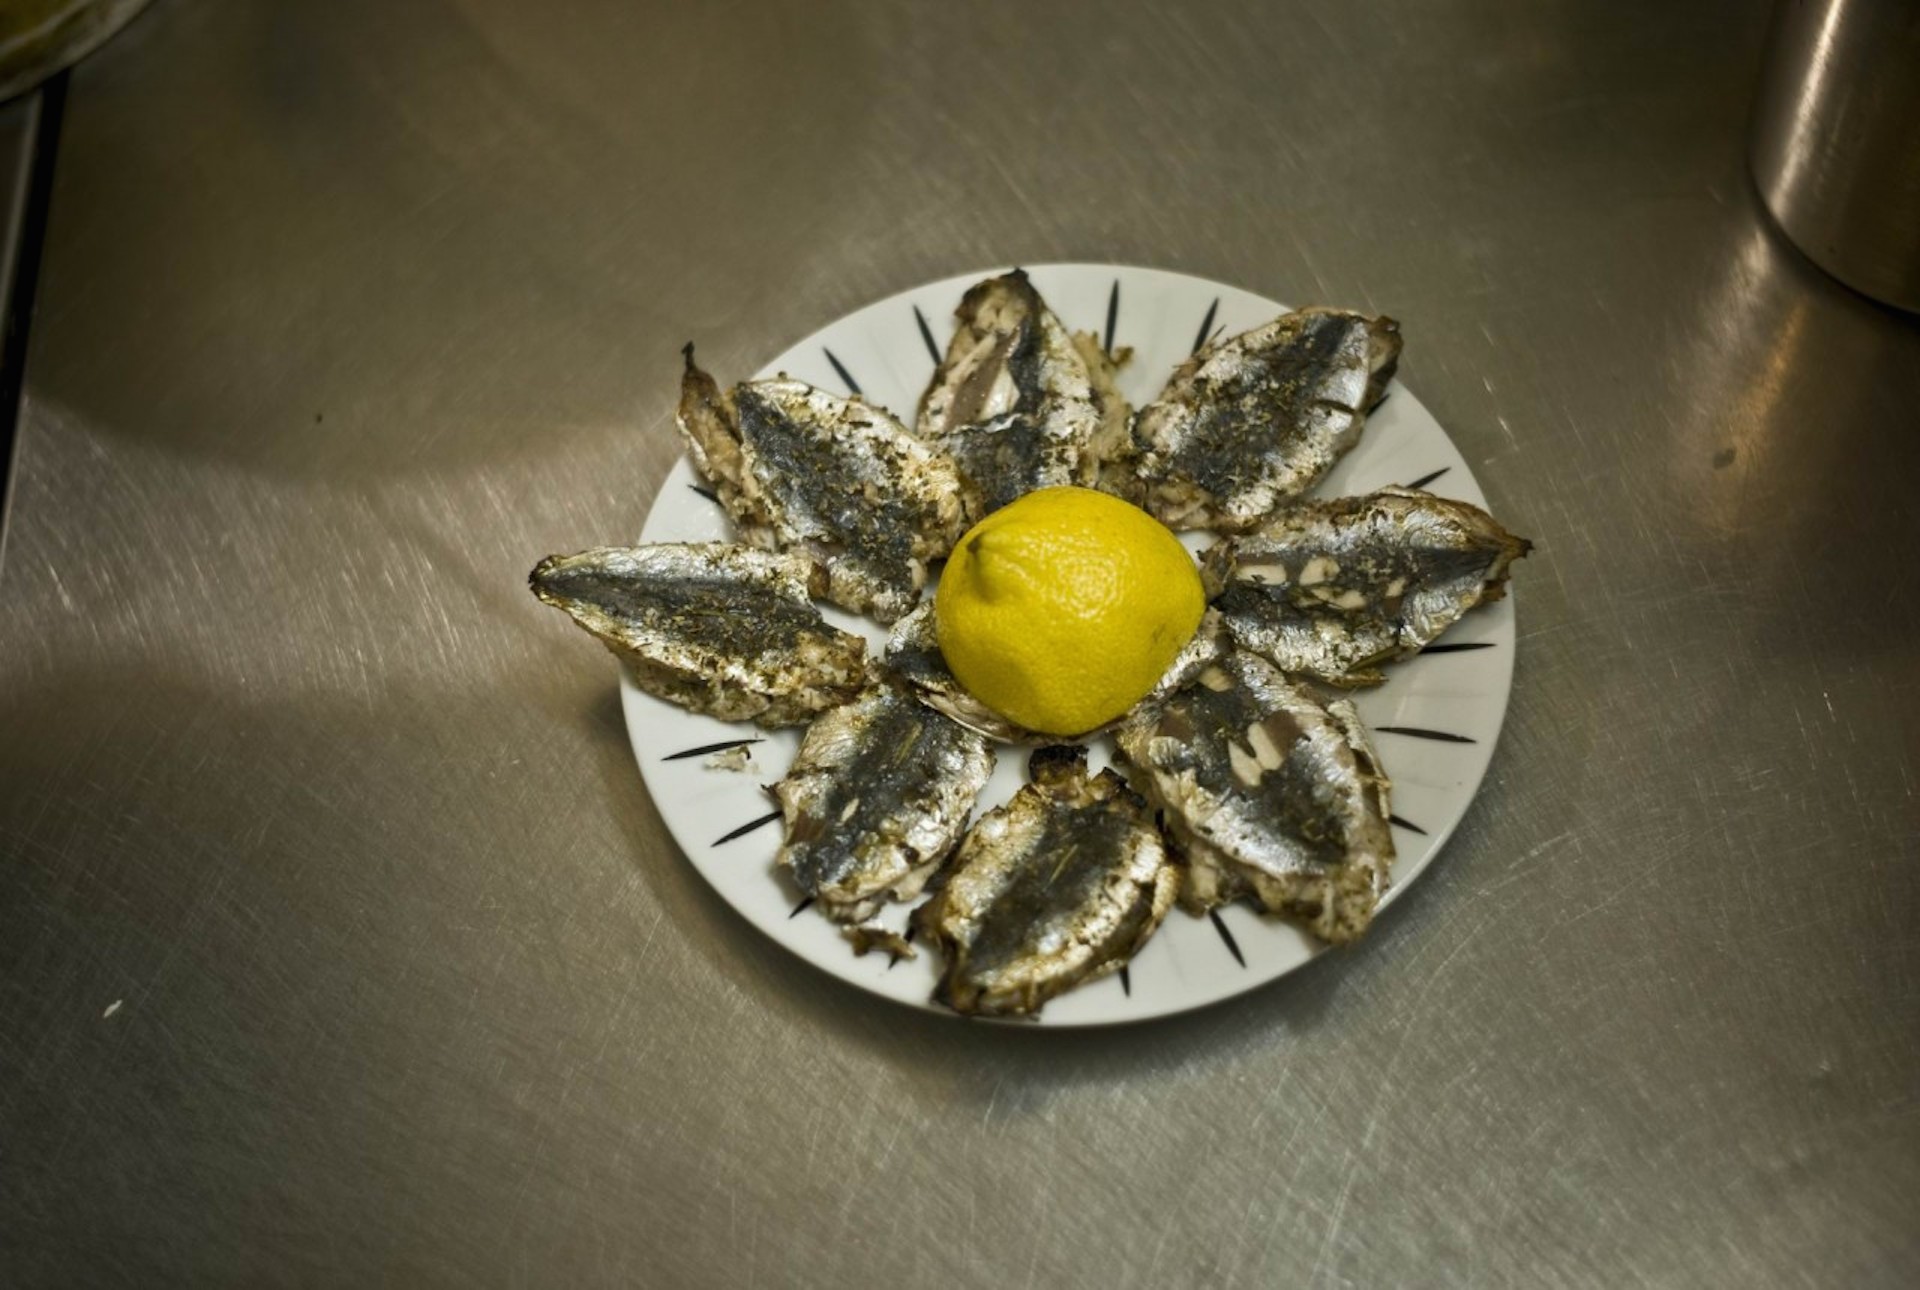 022-fish-lemon-dish-food-athens-september_2013-angelos_christofilopoulos-fosphotos-popaganda-1280x860